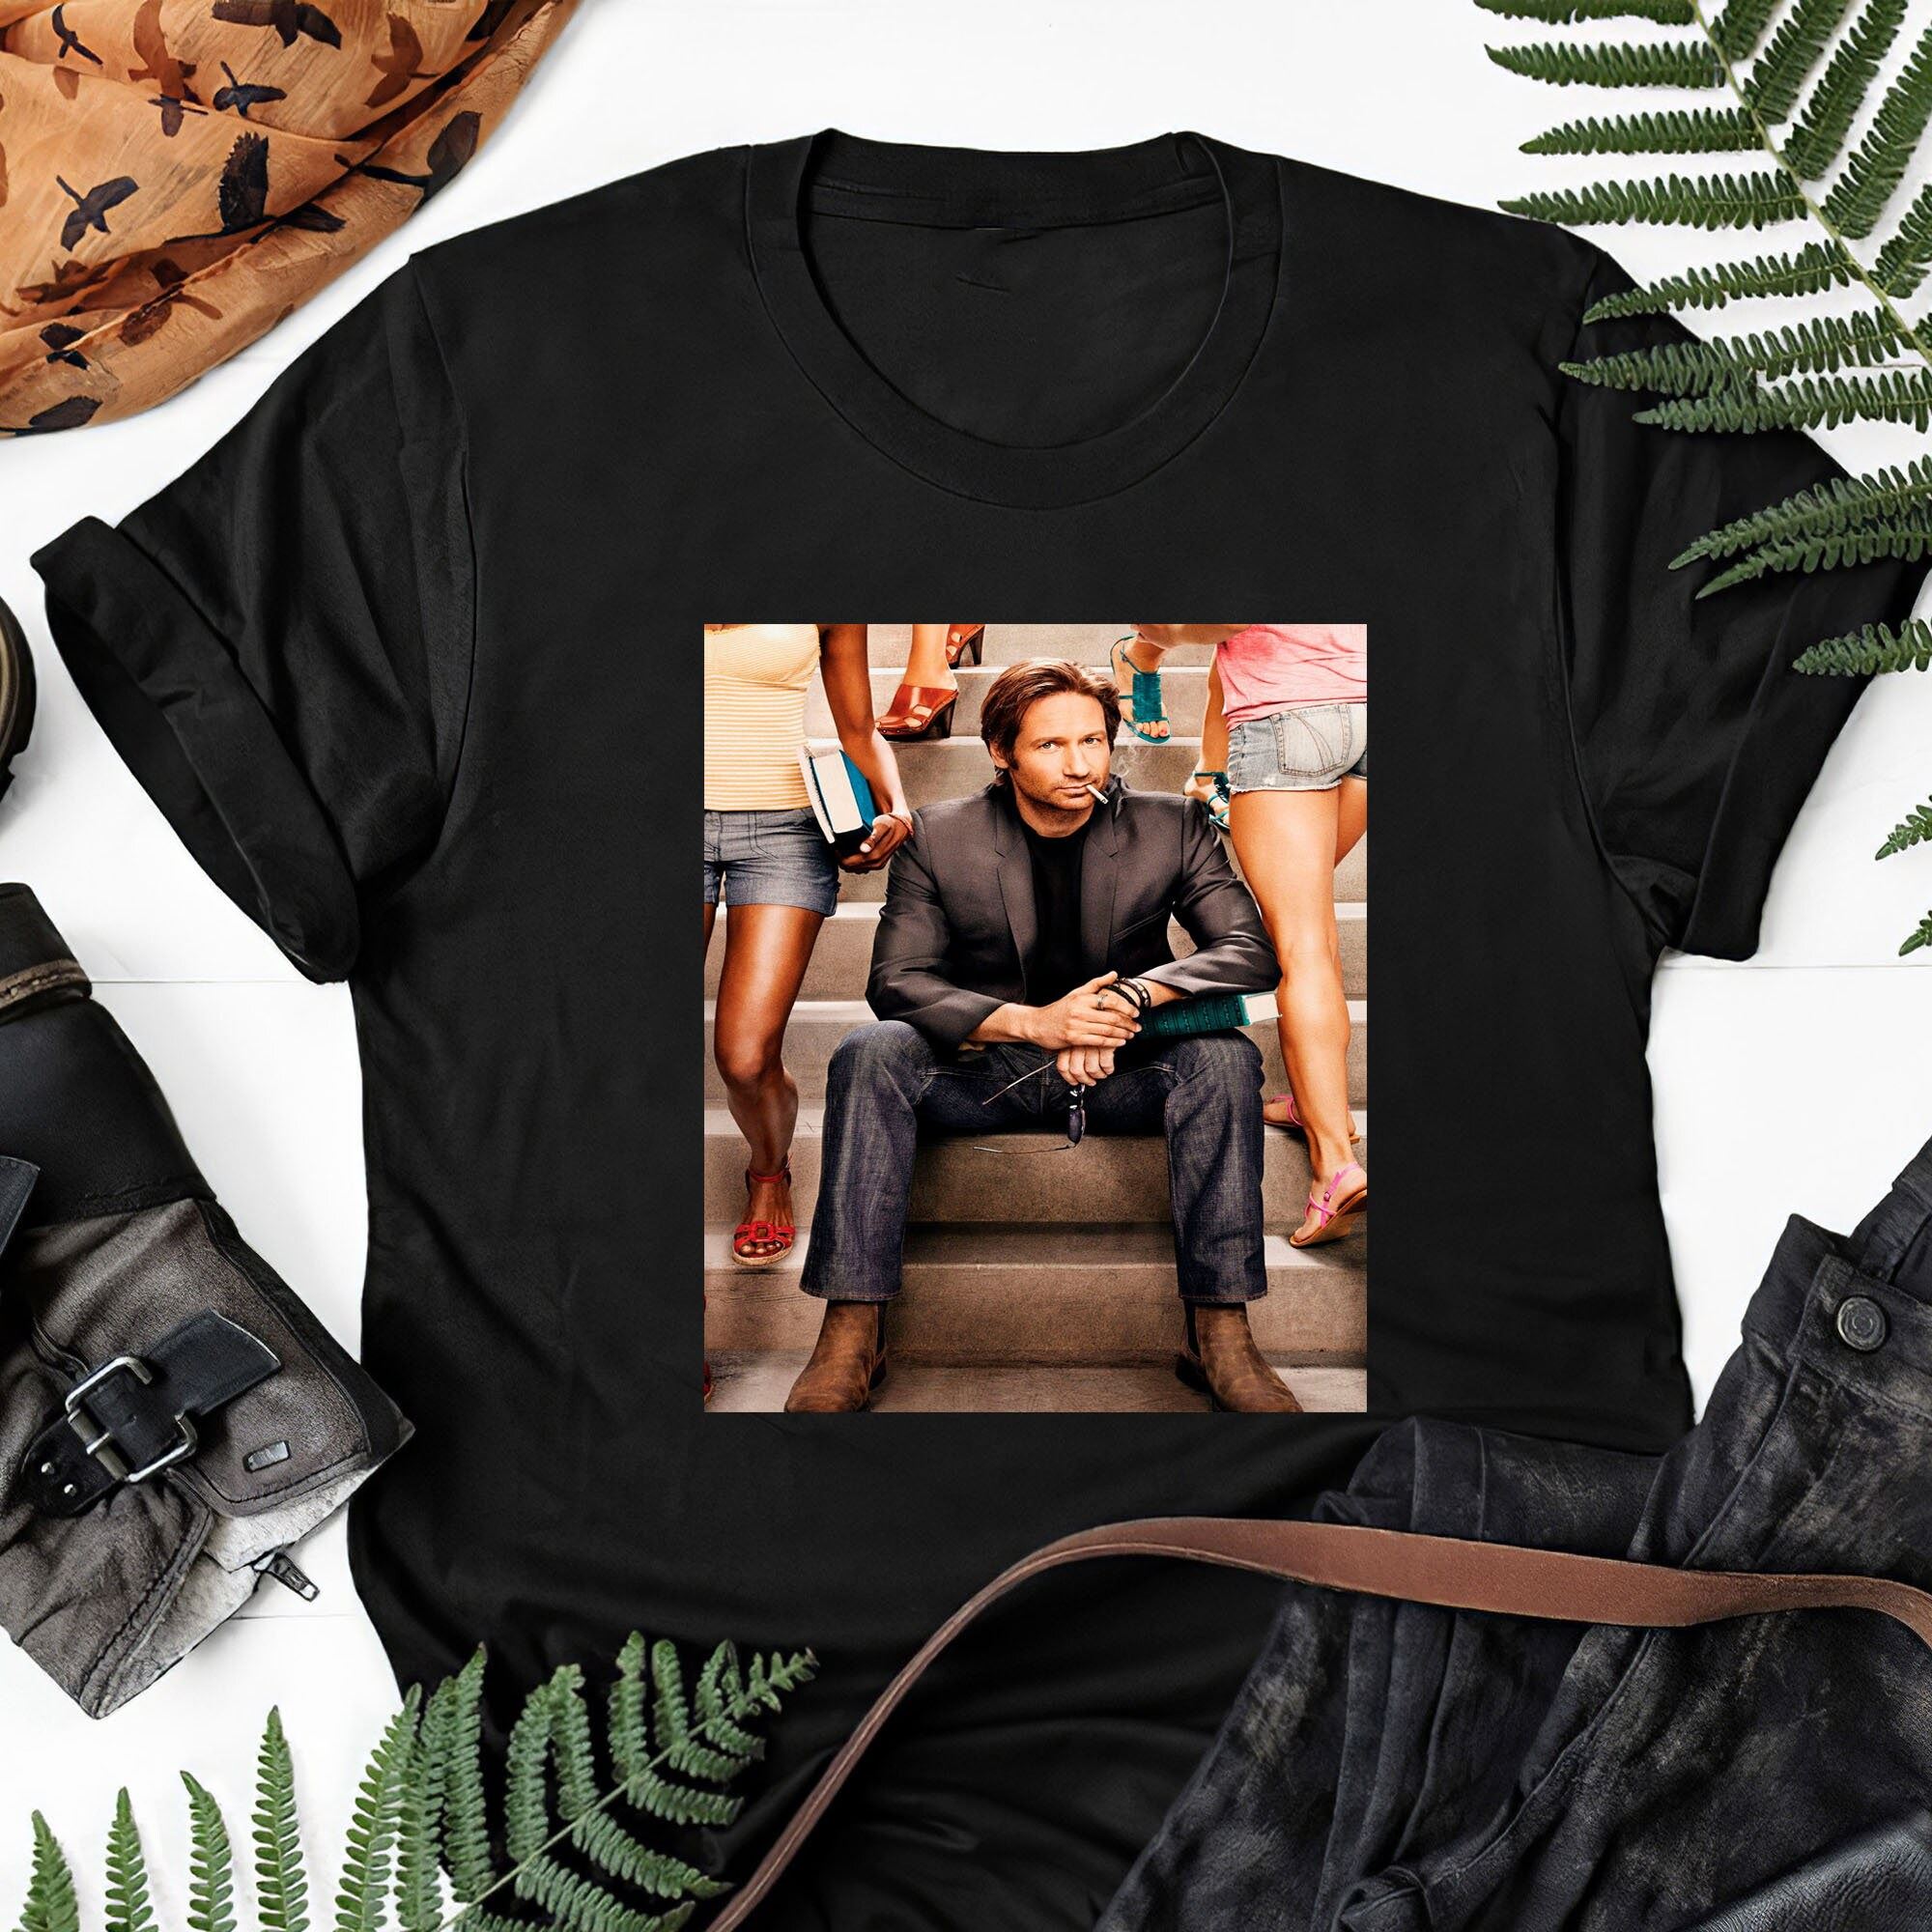 Californication Poster Hank Moody David Duchovny Image Gift Tee For Men Women Unisex T-shirt